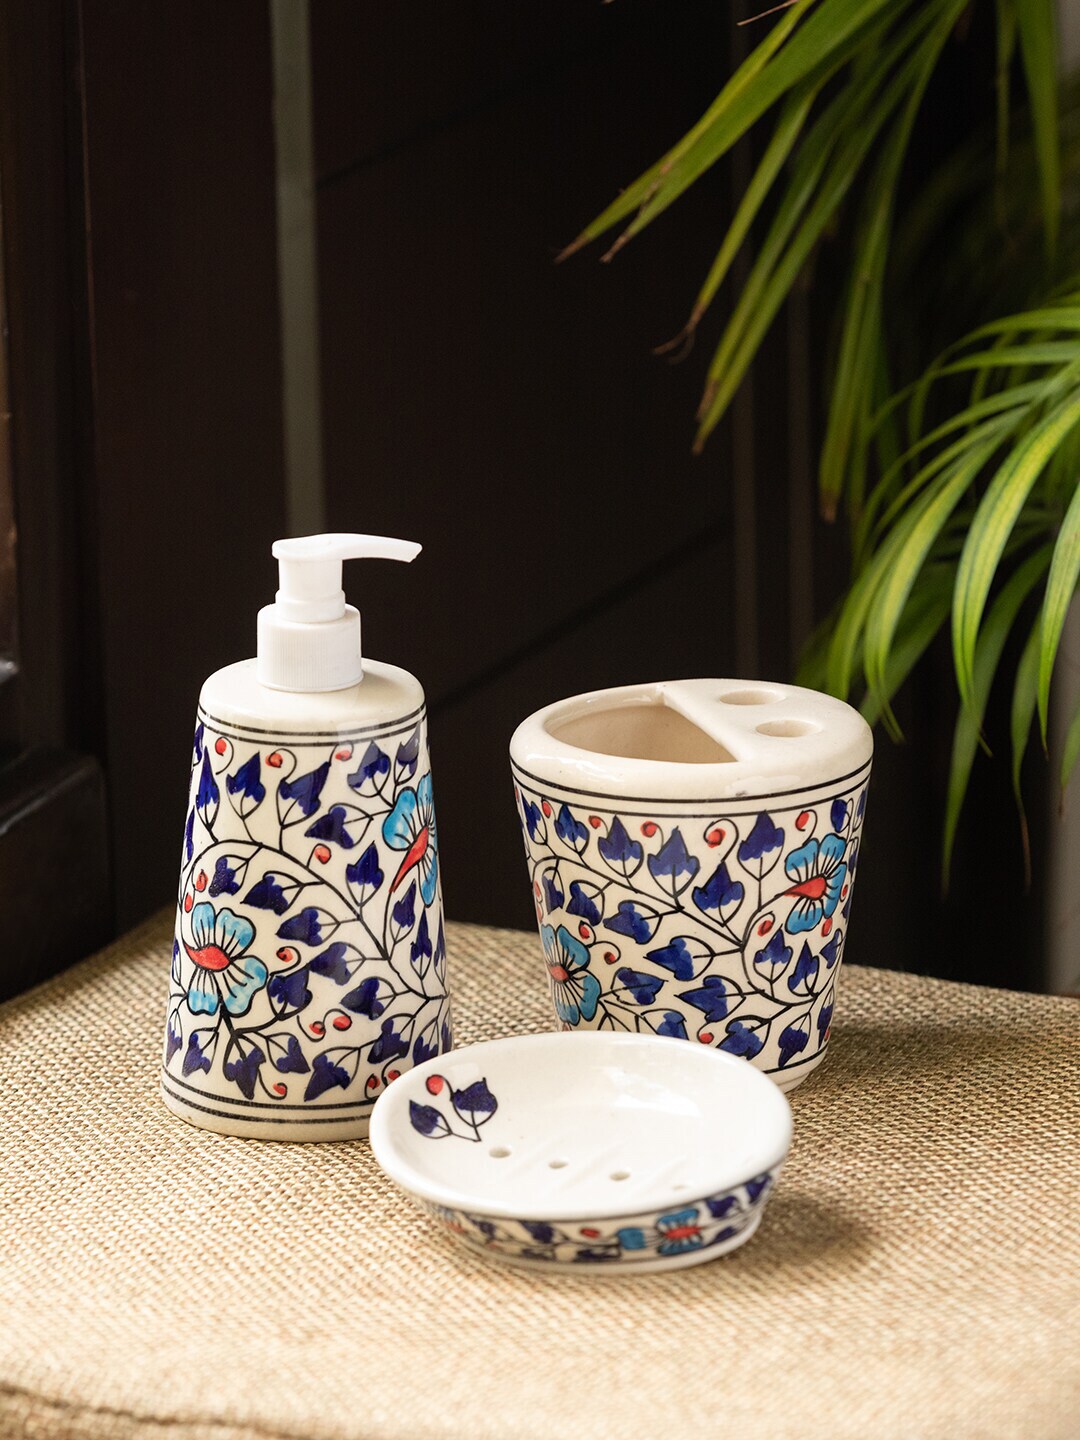 ExclusiveLane Set of 3 White & Blue Hand-painted Ceramic Bathroom Accessory Set Price in India